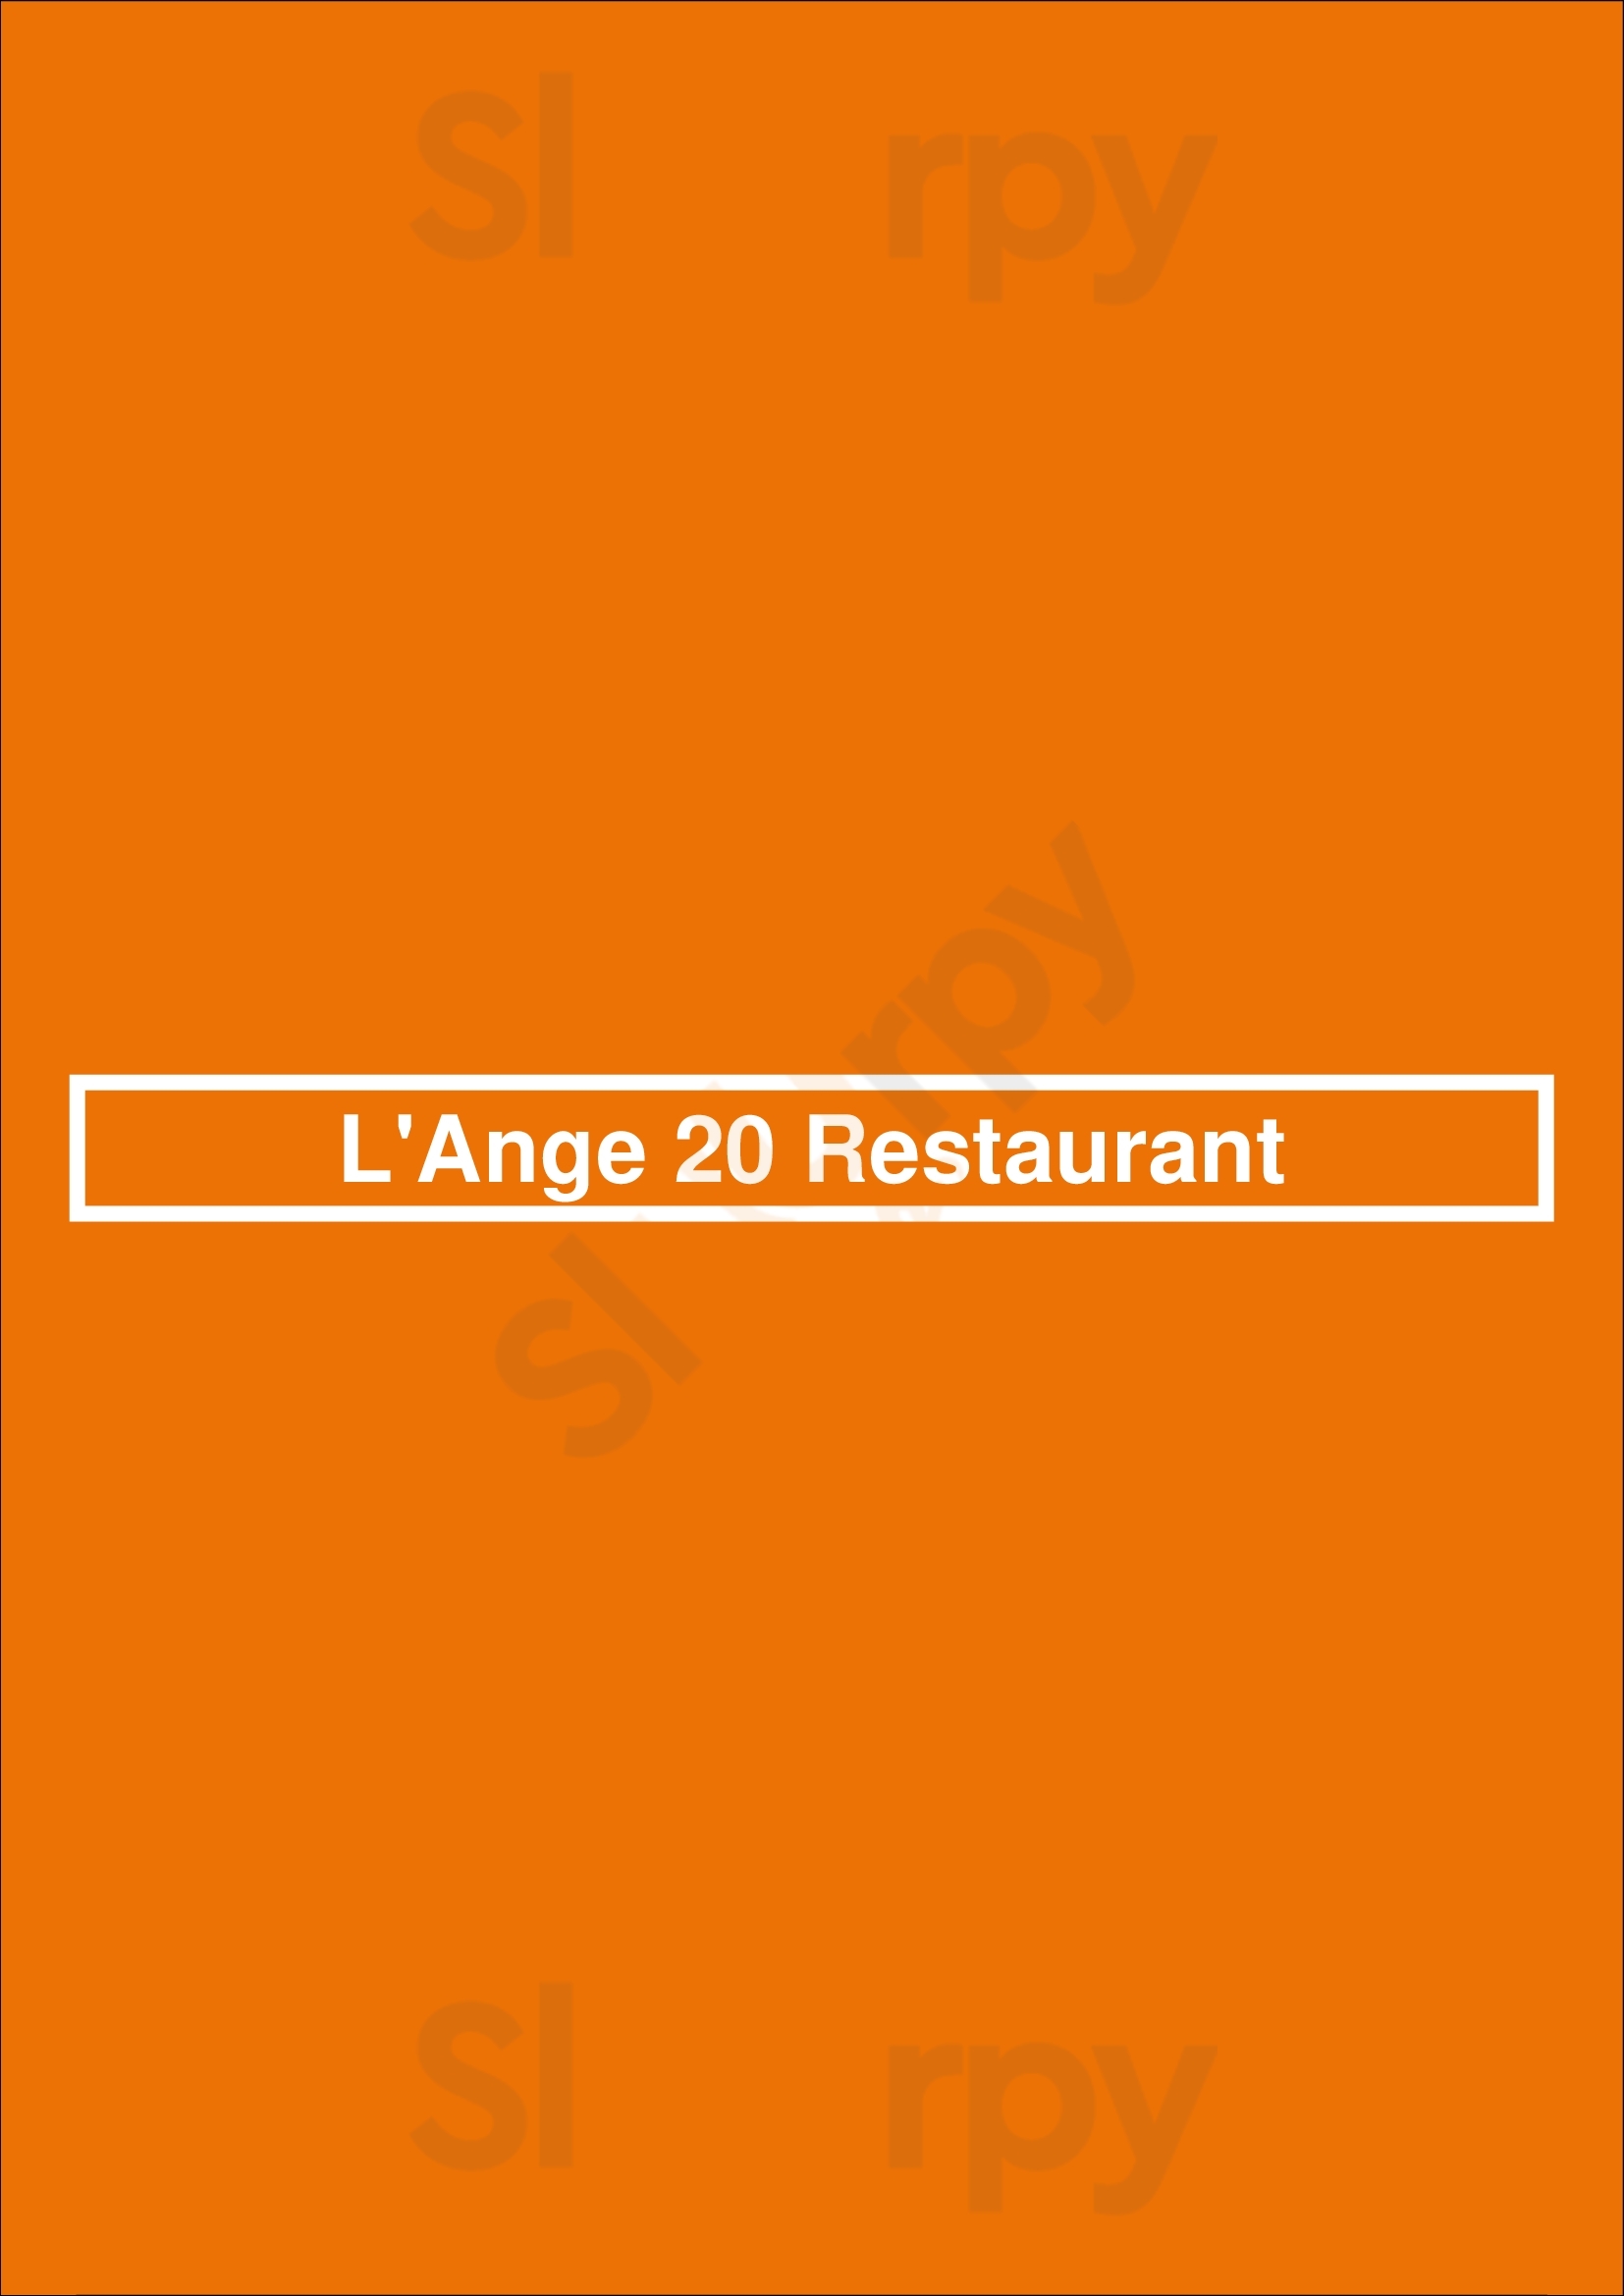 L'ange 20 Restaurant Paris Menu - 1